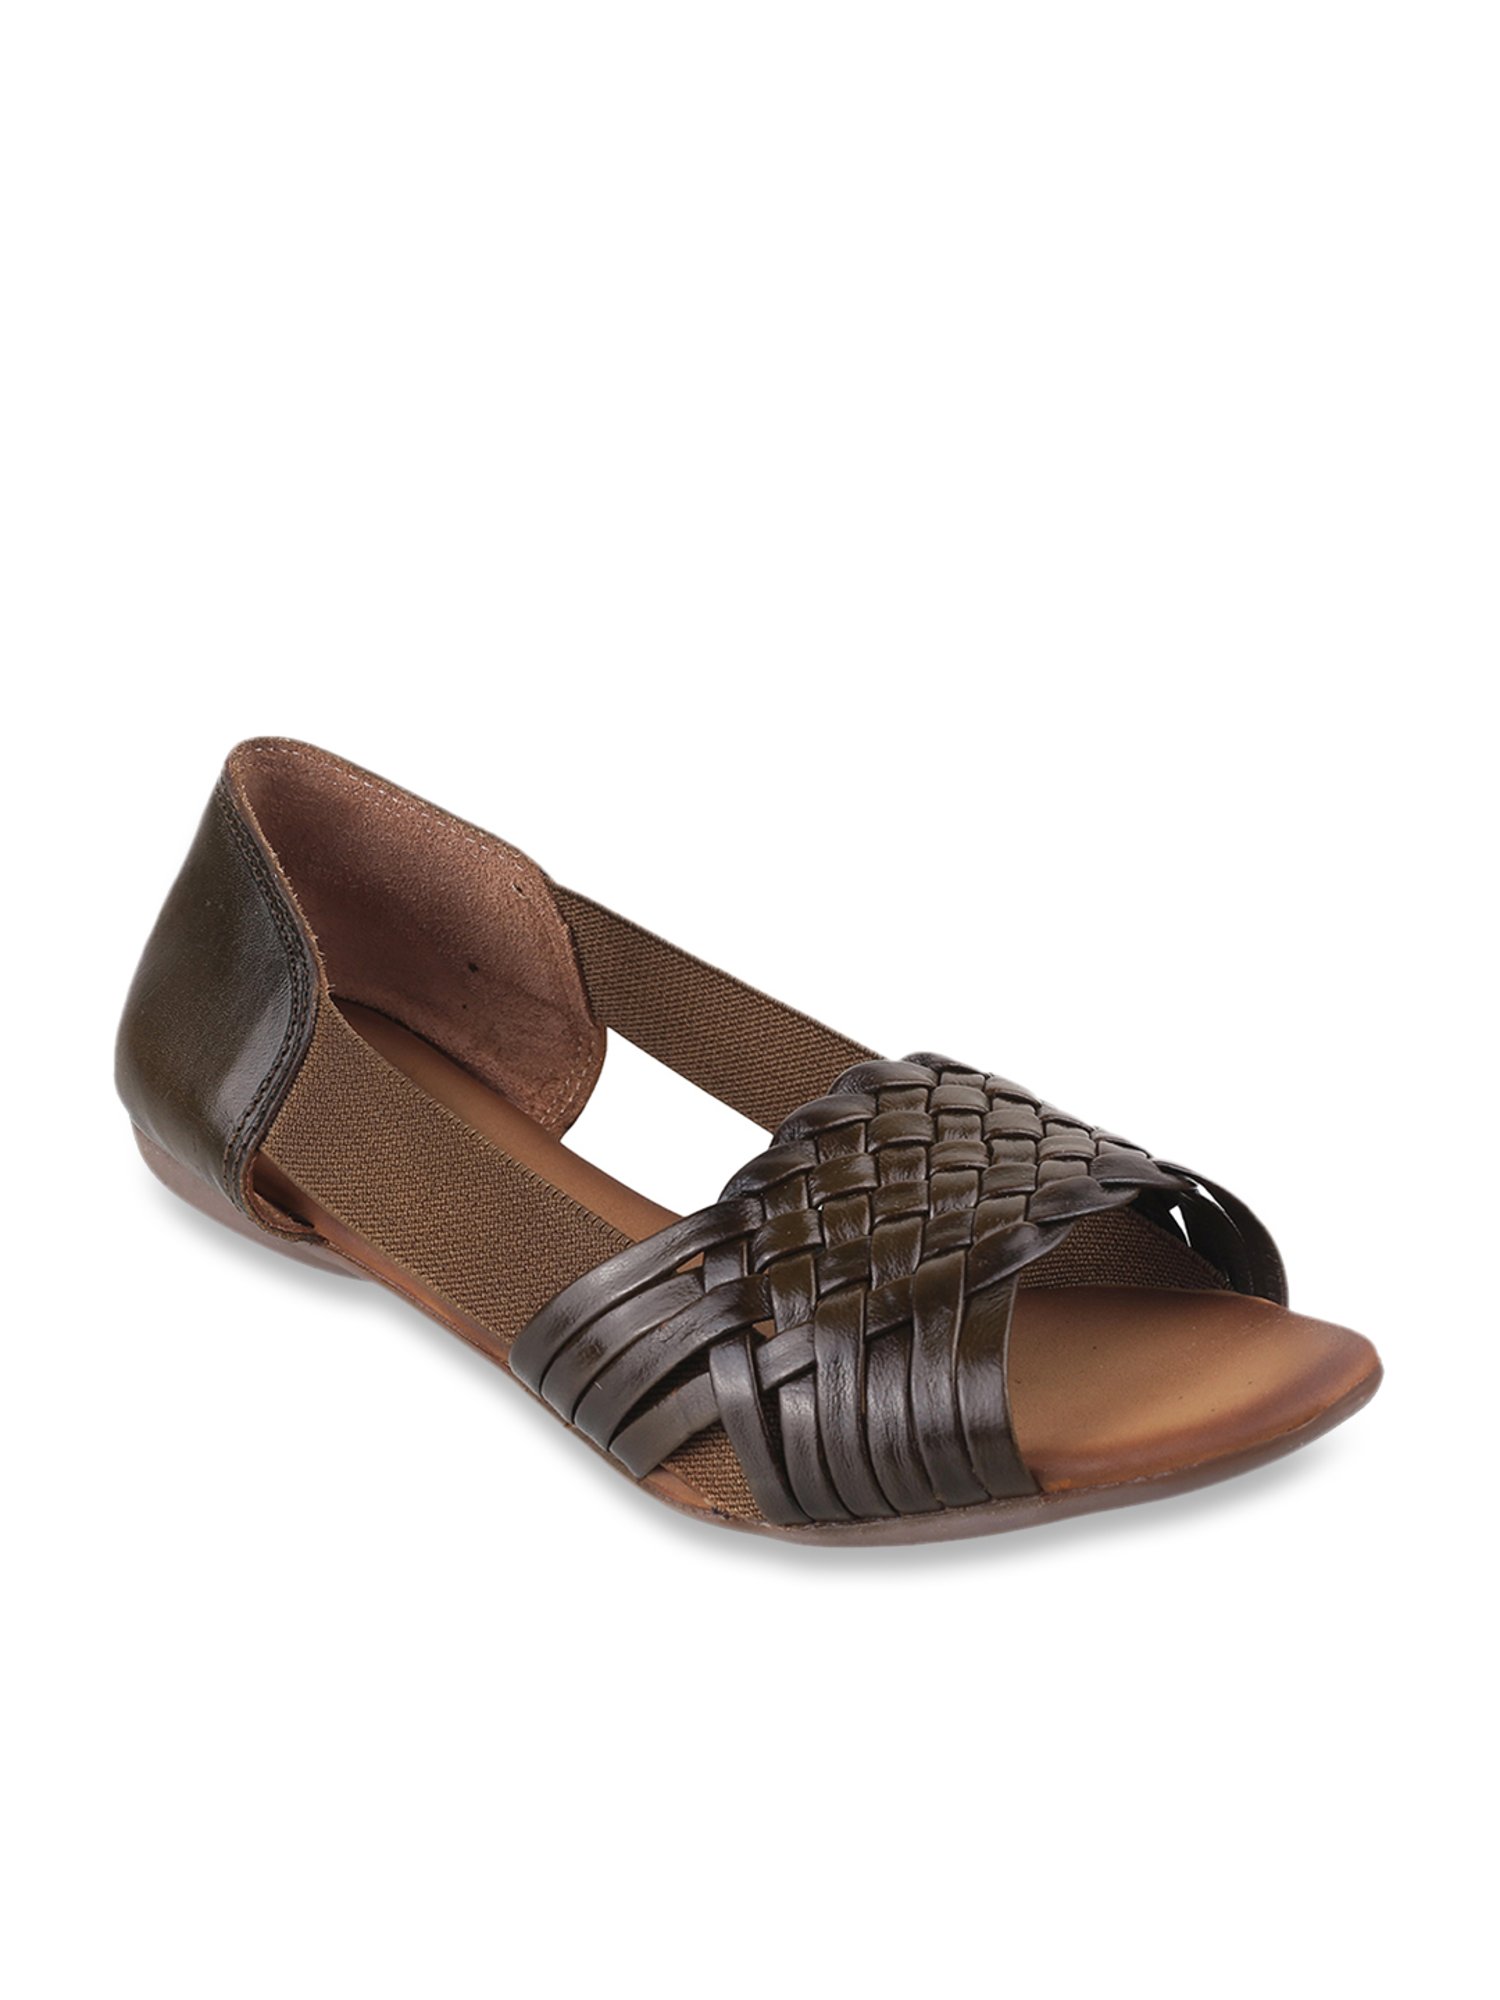 Buy Rocia Beige Women Laser Cut Flat Sandals Online at Regal Shoes |7968394